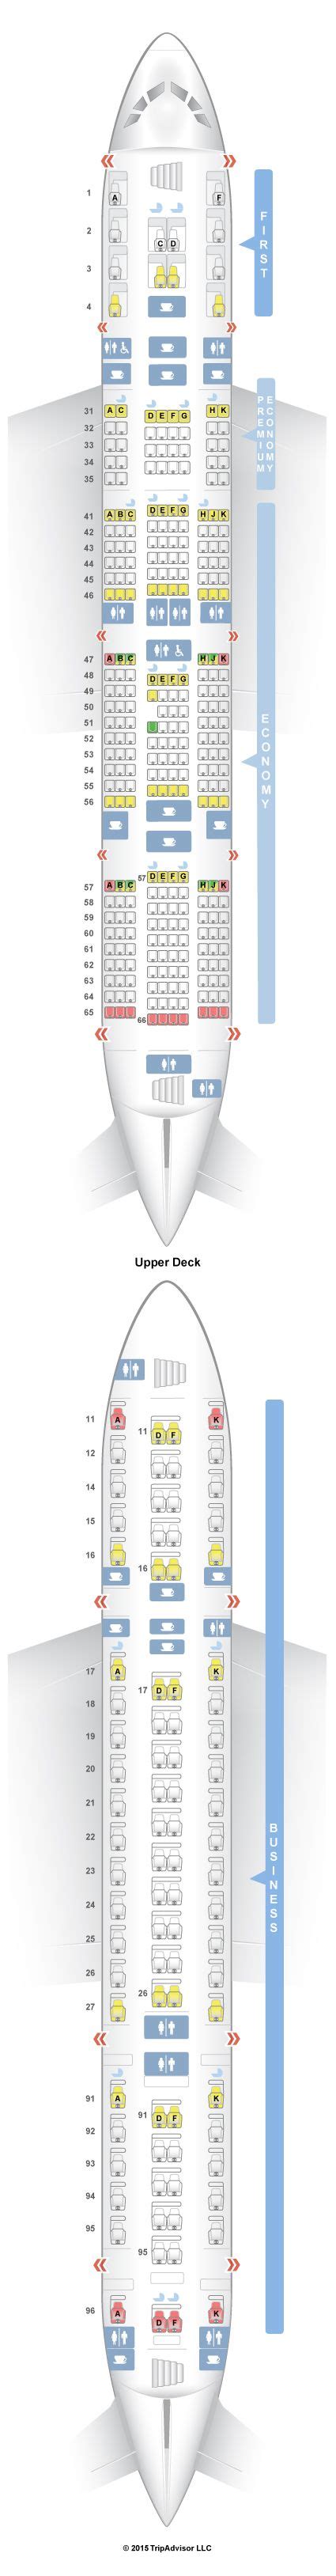 Singapore Airlines Airbus Seat Map Porn Sex Picture